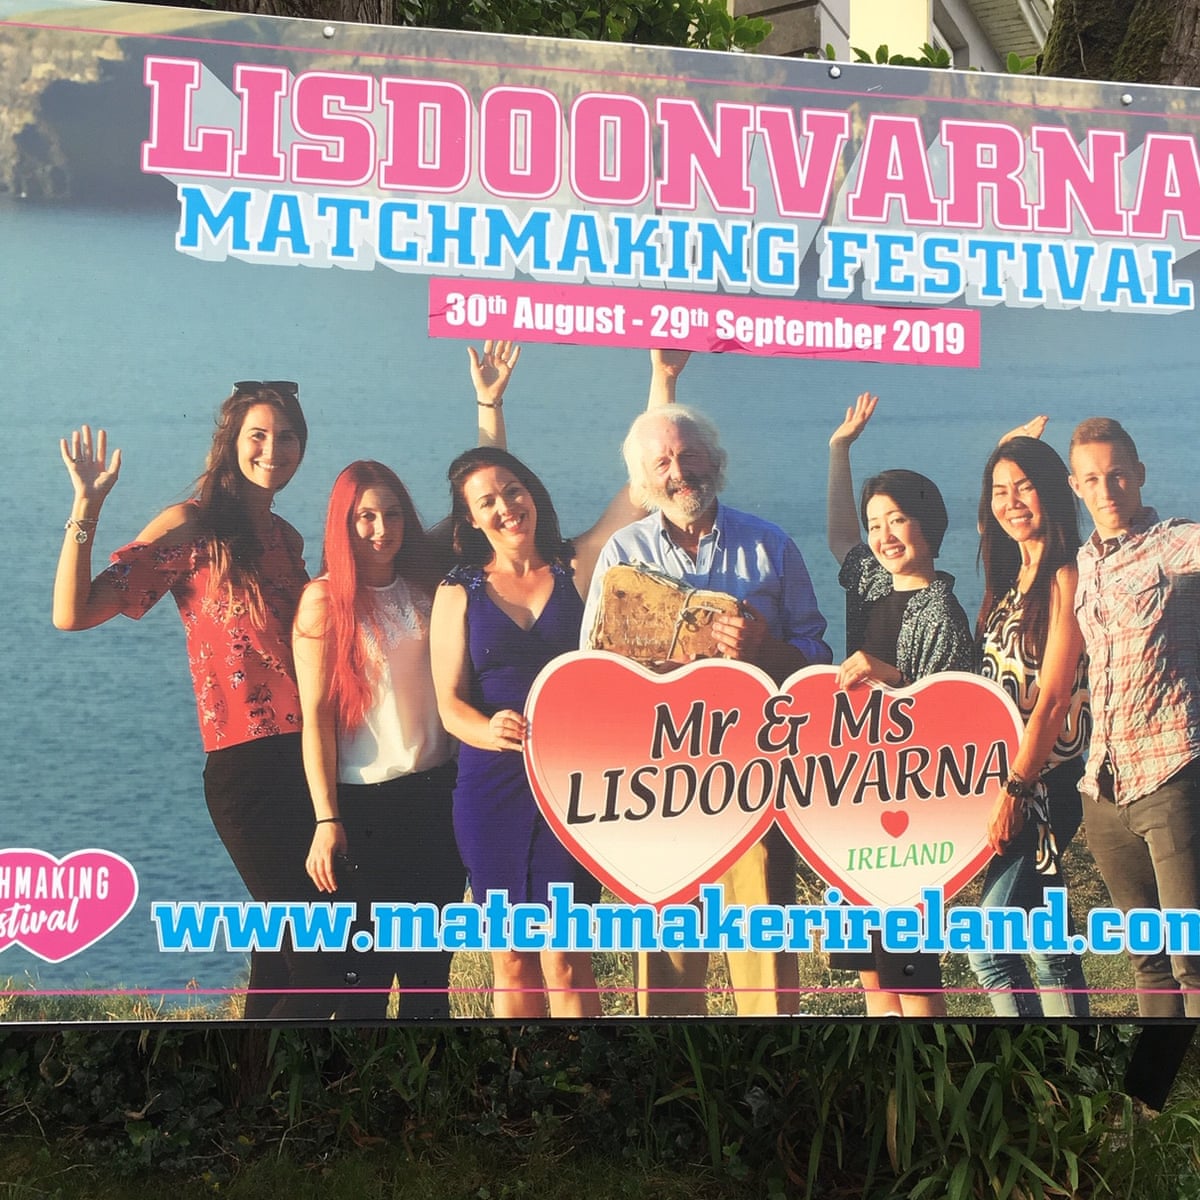 Willie Daly | Lisdoonvarna | Traditional Matchmaker in Ireland